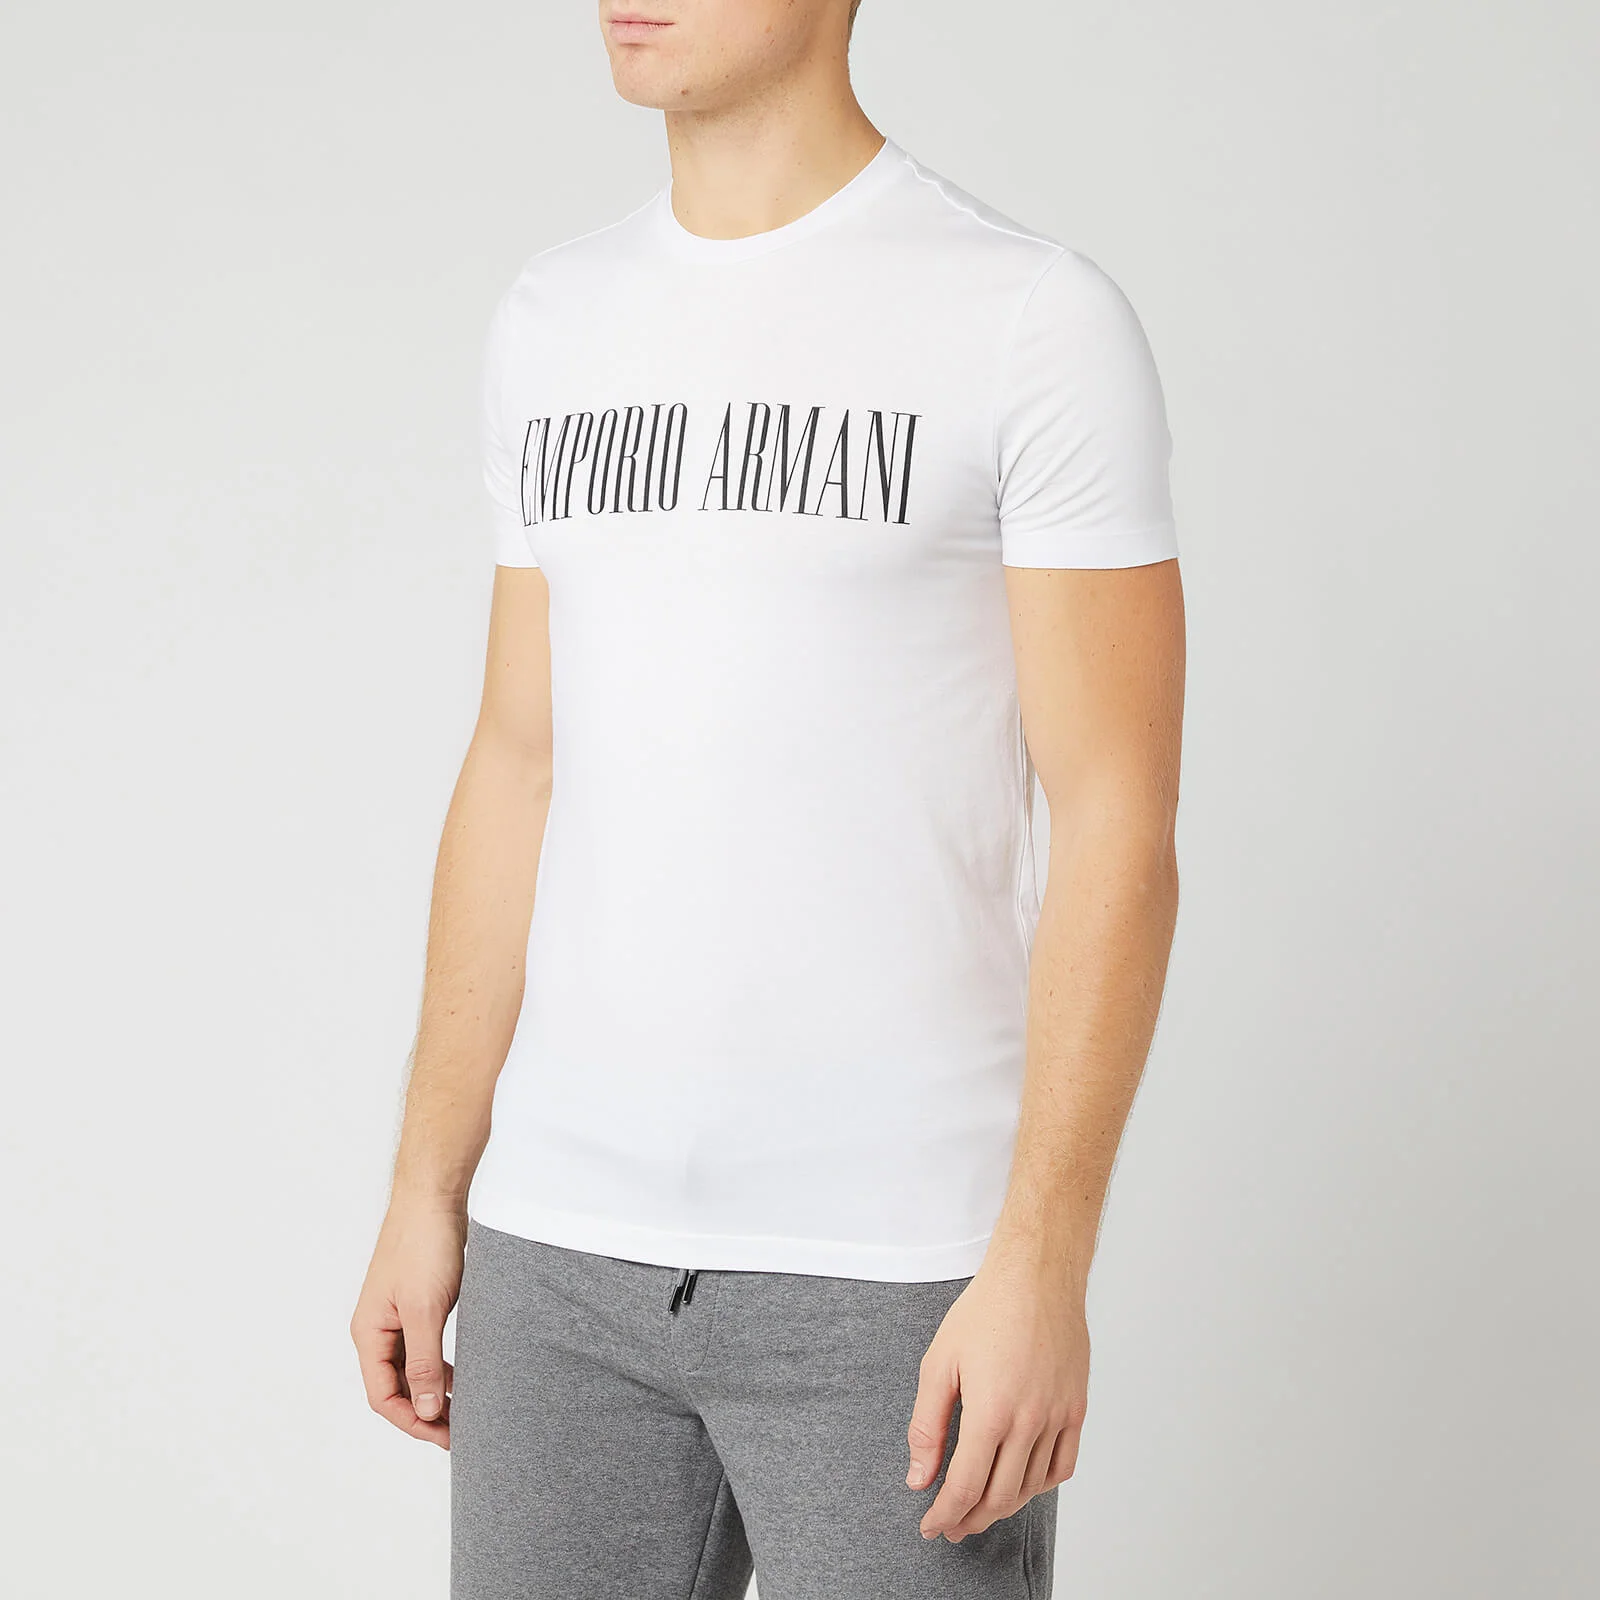 Emporio Armani Men's Script Chest Logo T-Shirt - White Image 1